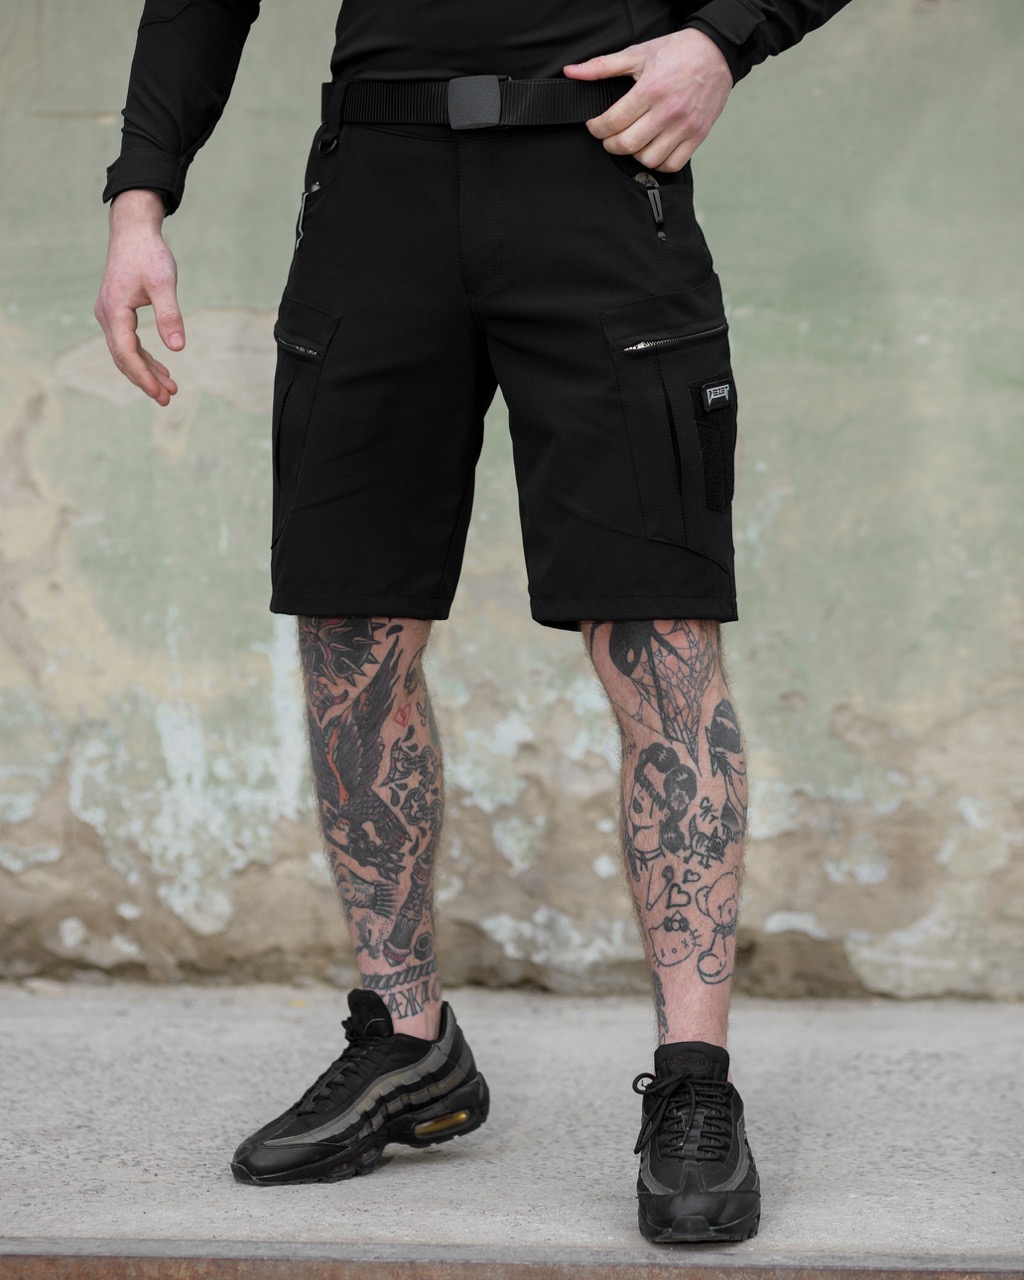 Тактичний комплект BEZET TACTIC чорний (футболка Combat, шорти карго Ешелон, нагрудна сумка Tactic, бейсболка Military)